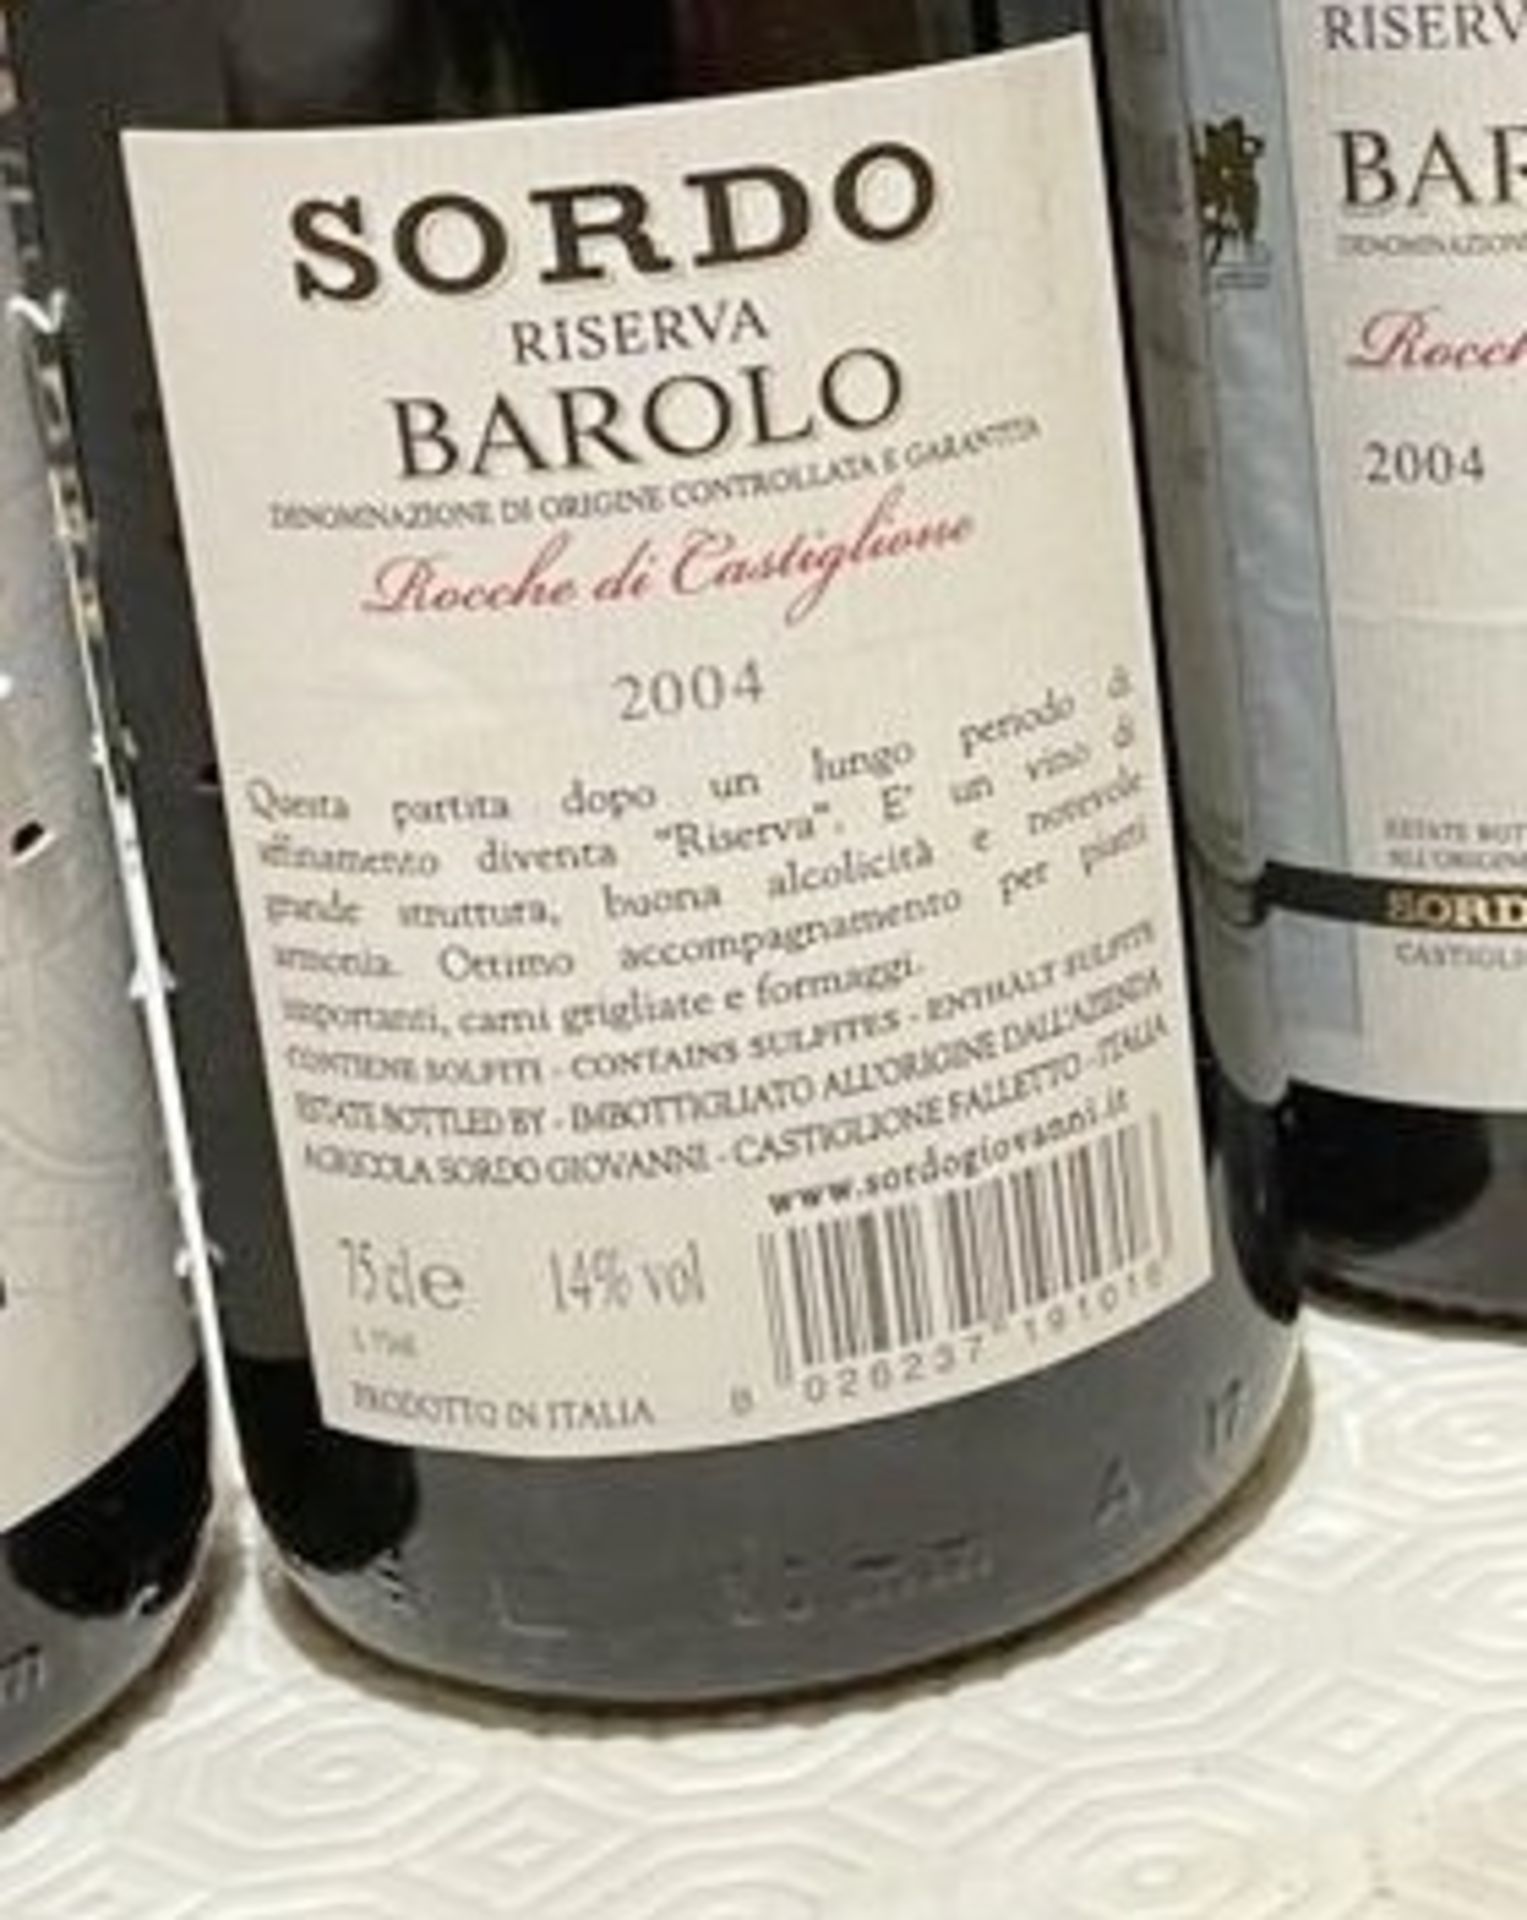 5 x Bottles Of SORDO BAROLO - 2004 - 75cl - New/Unopened Restaurant Stock - Ref: CAM548 - Image 3 of 3